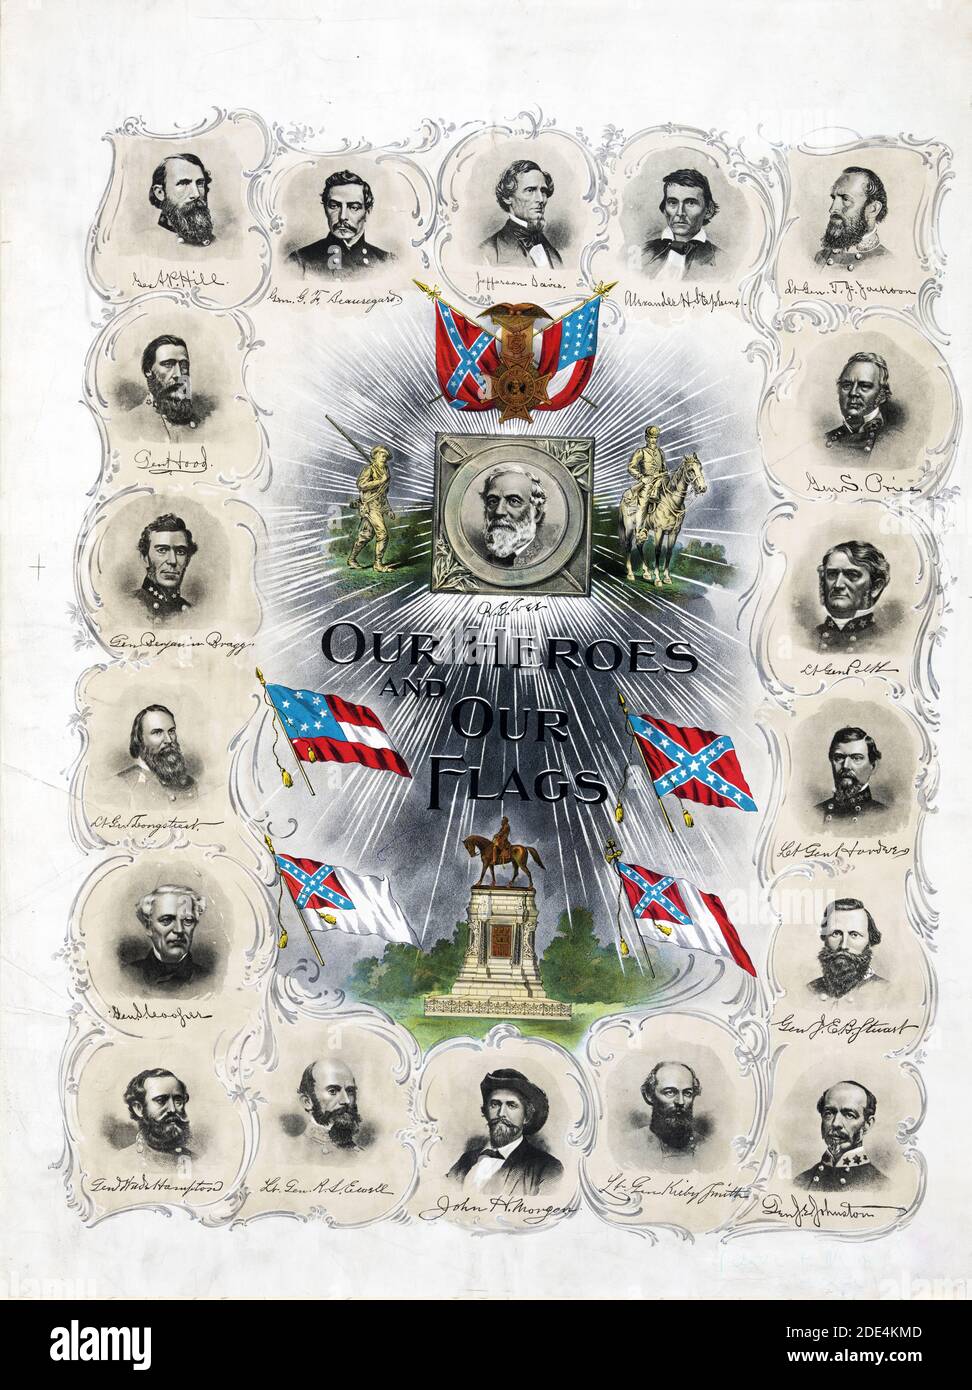 Memorial print for the Confederacy, published 30 years after the end of the American Civil War. Portraits, clockwise from top center, of "Jefferson Davis, Alexander H. Stephens, Lt. Gen. T.J. [Stonewall] Jackson, Gen. S. Price, Lt. Gen. Polk, Lt. Gen. Hardee, Gen J.E.B. Stuart, Gen. J.E. Johnston, Lt. Gen. Kirby Smith, John H. Morgan, Lt. Gen. R.S. Ewell, Gen. Wade Hampton, Gen. S. Cooper, Lt. Gen. Longstreet, Gen. Benjamin [i.e., Braxton] Bragg, Gen. Hood, Gen. A.P. Hill, [and] Gen. G.F. [i.e., G.T.] Beauregard," surround the central image of Robert E. Lee, an equestrian statue, and four Conf Stock Photo